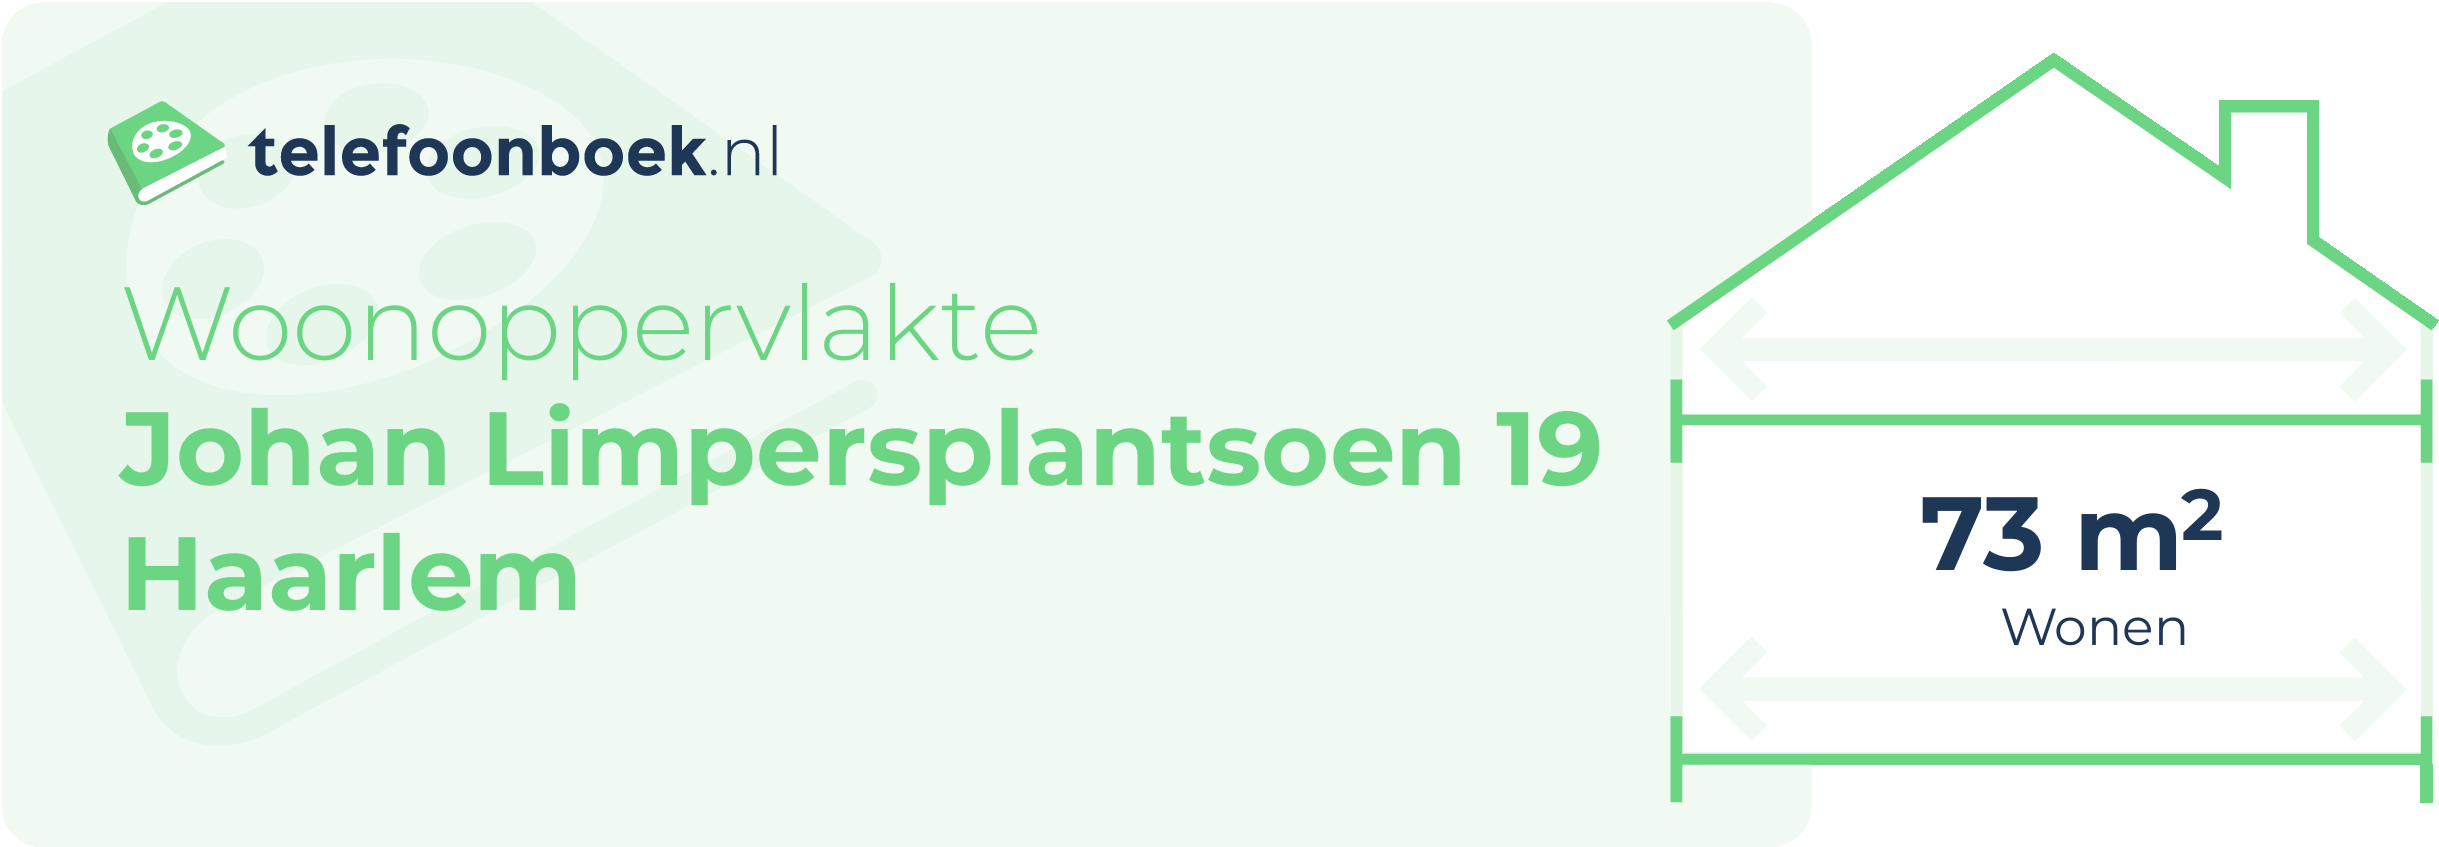 Woonoppervlakte Johan Limpersplantsoen 19 Haarlem